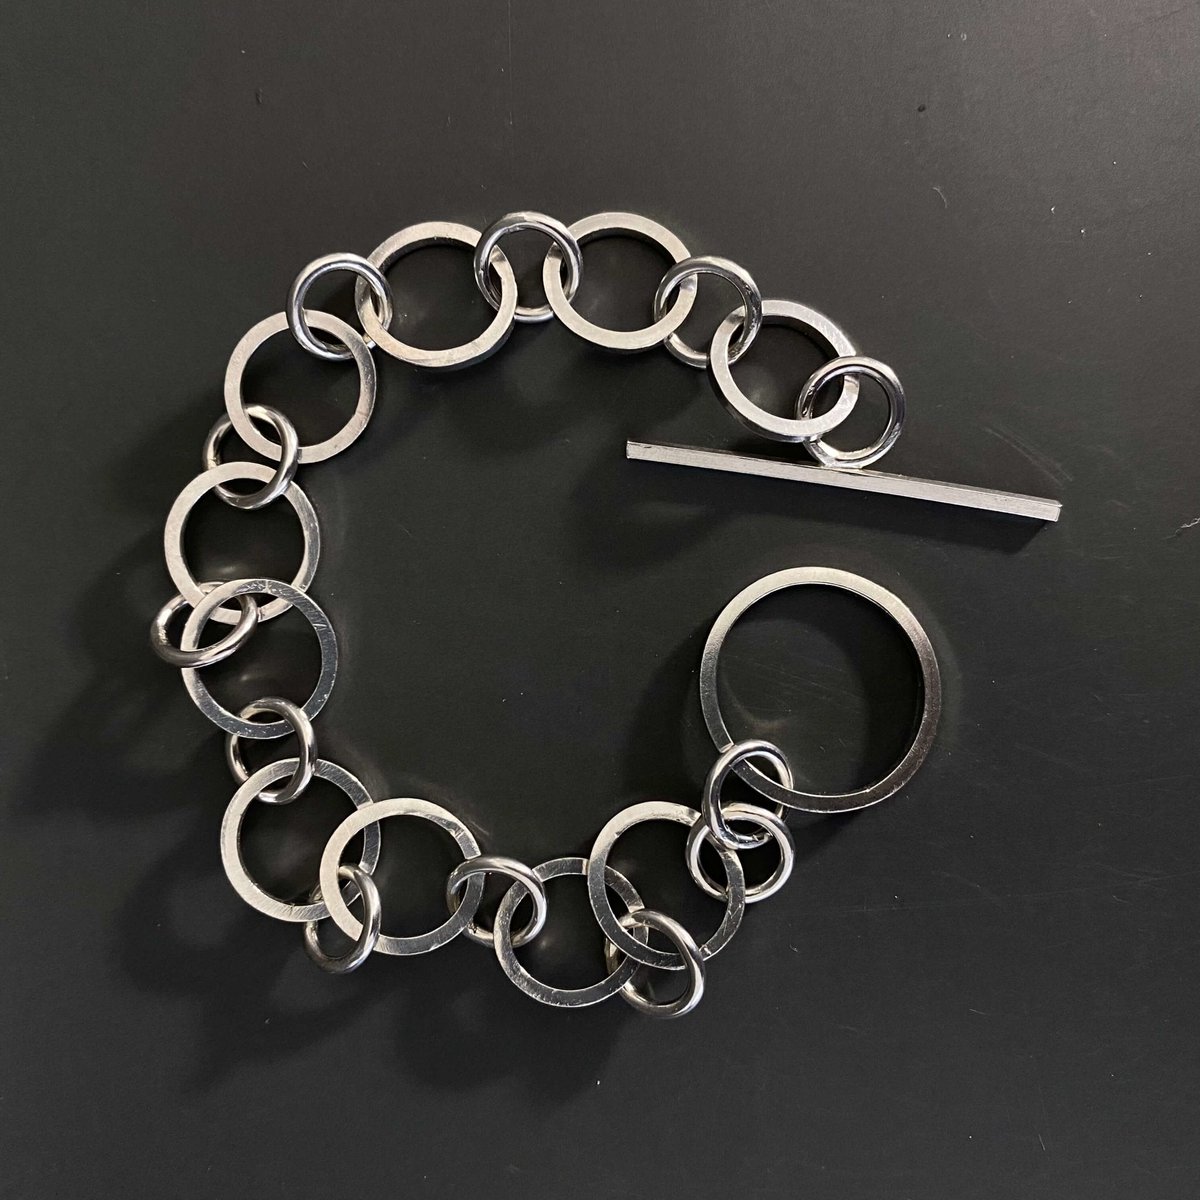 Contemporary Handmade Chunky Sterling Silver Circle Bracelet tuppu.net/6d623c0d #shopsmall #inbizhour #HandmadeHour #giftideas ##UKGiftHour #UKHashtags #MHHSBD #bizbubble #SilverBracelet